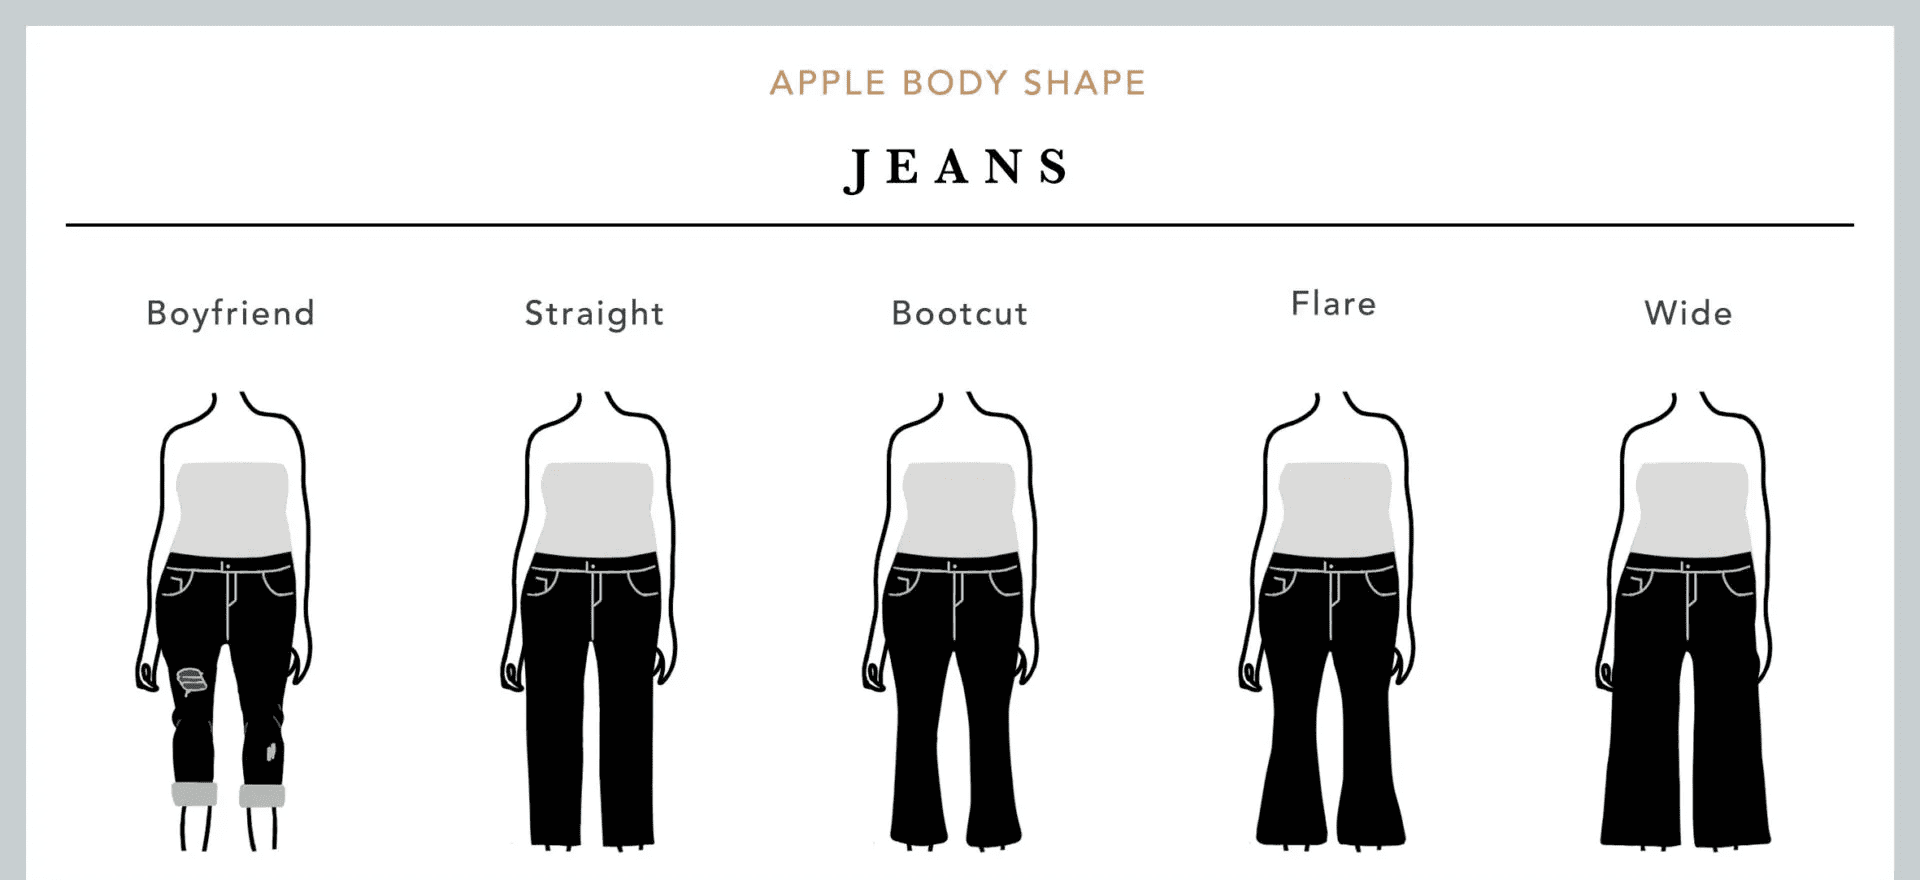 Apple or Round Body Shape